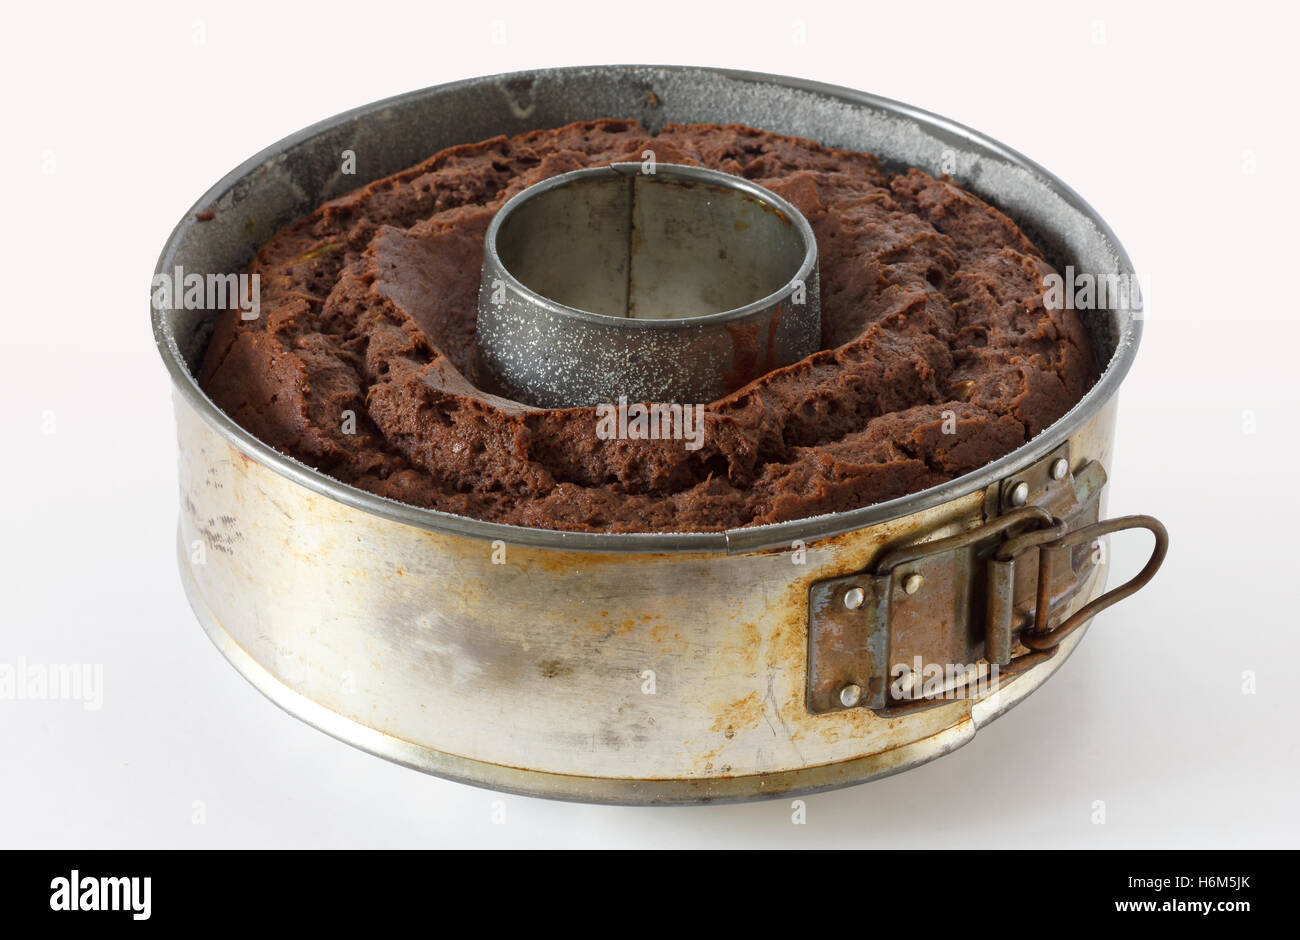 Verstellbare Runde Metall Ring mit Schokolade Biskuit backen. Stockfoto